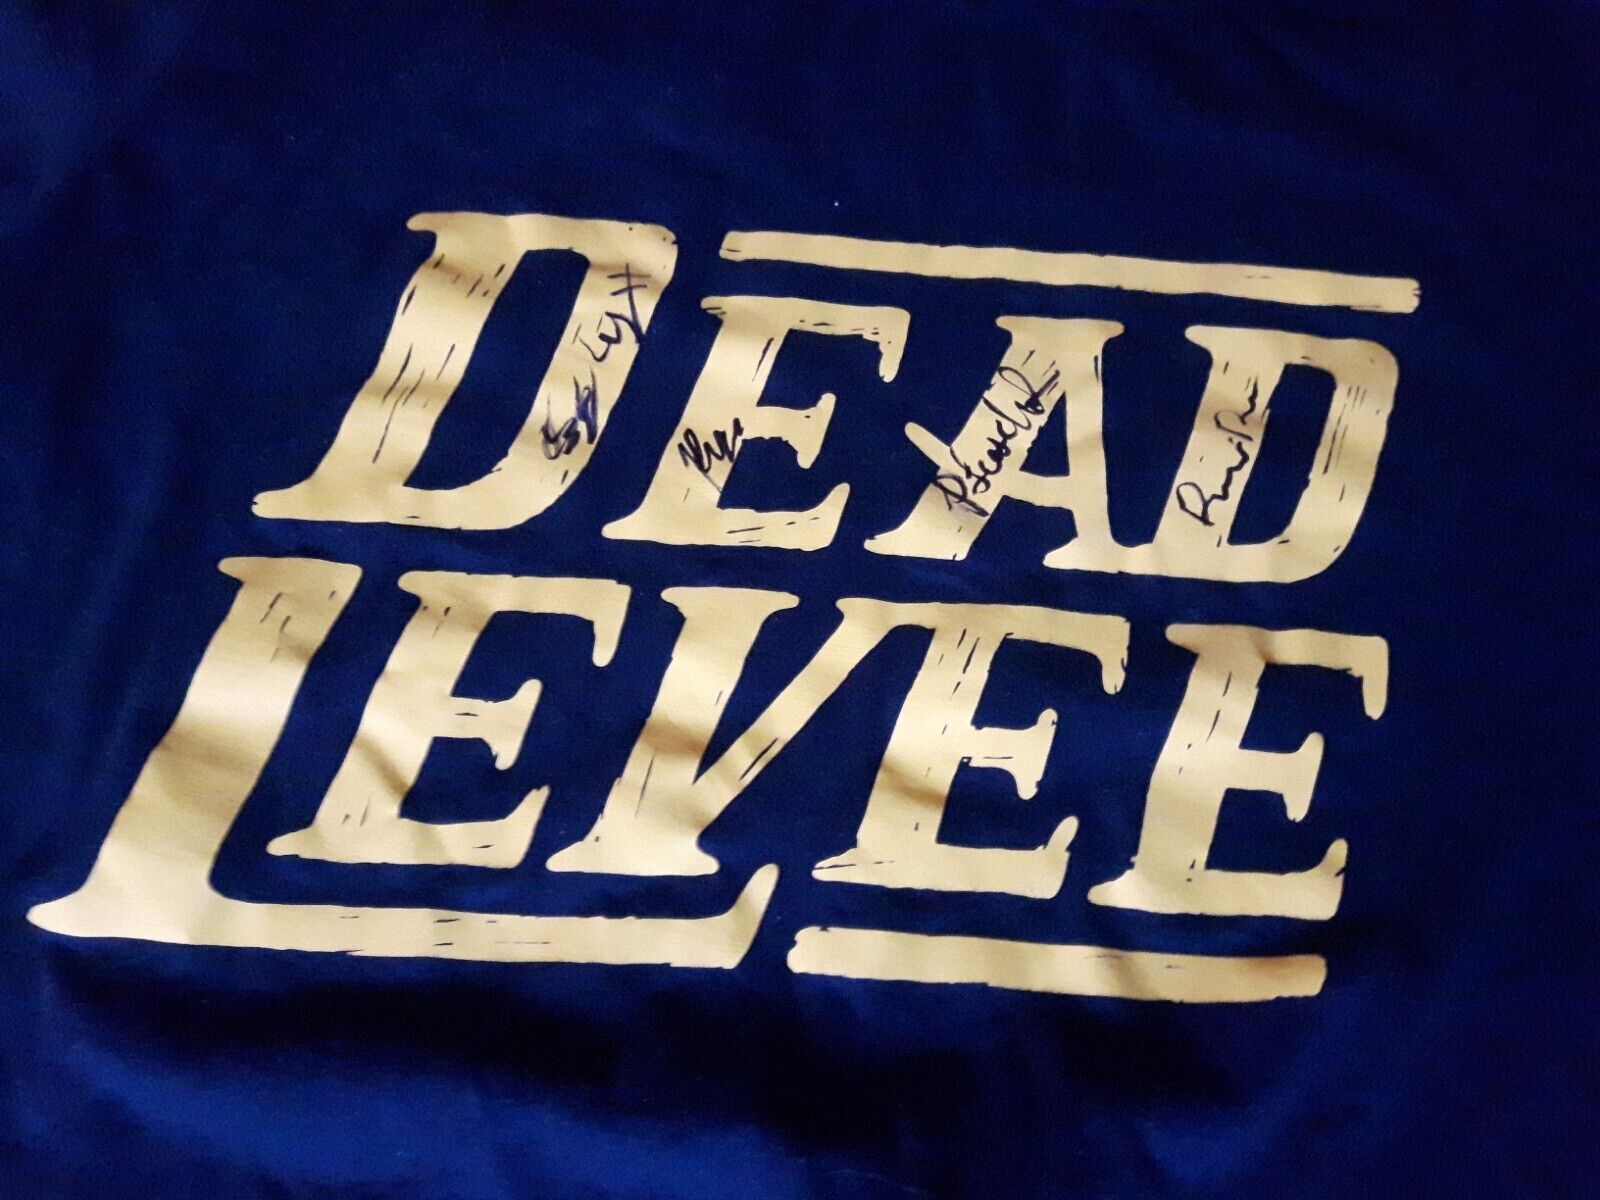 Dead Levee Autographed T-shirt. Regina, SK Band. Signed